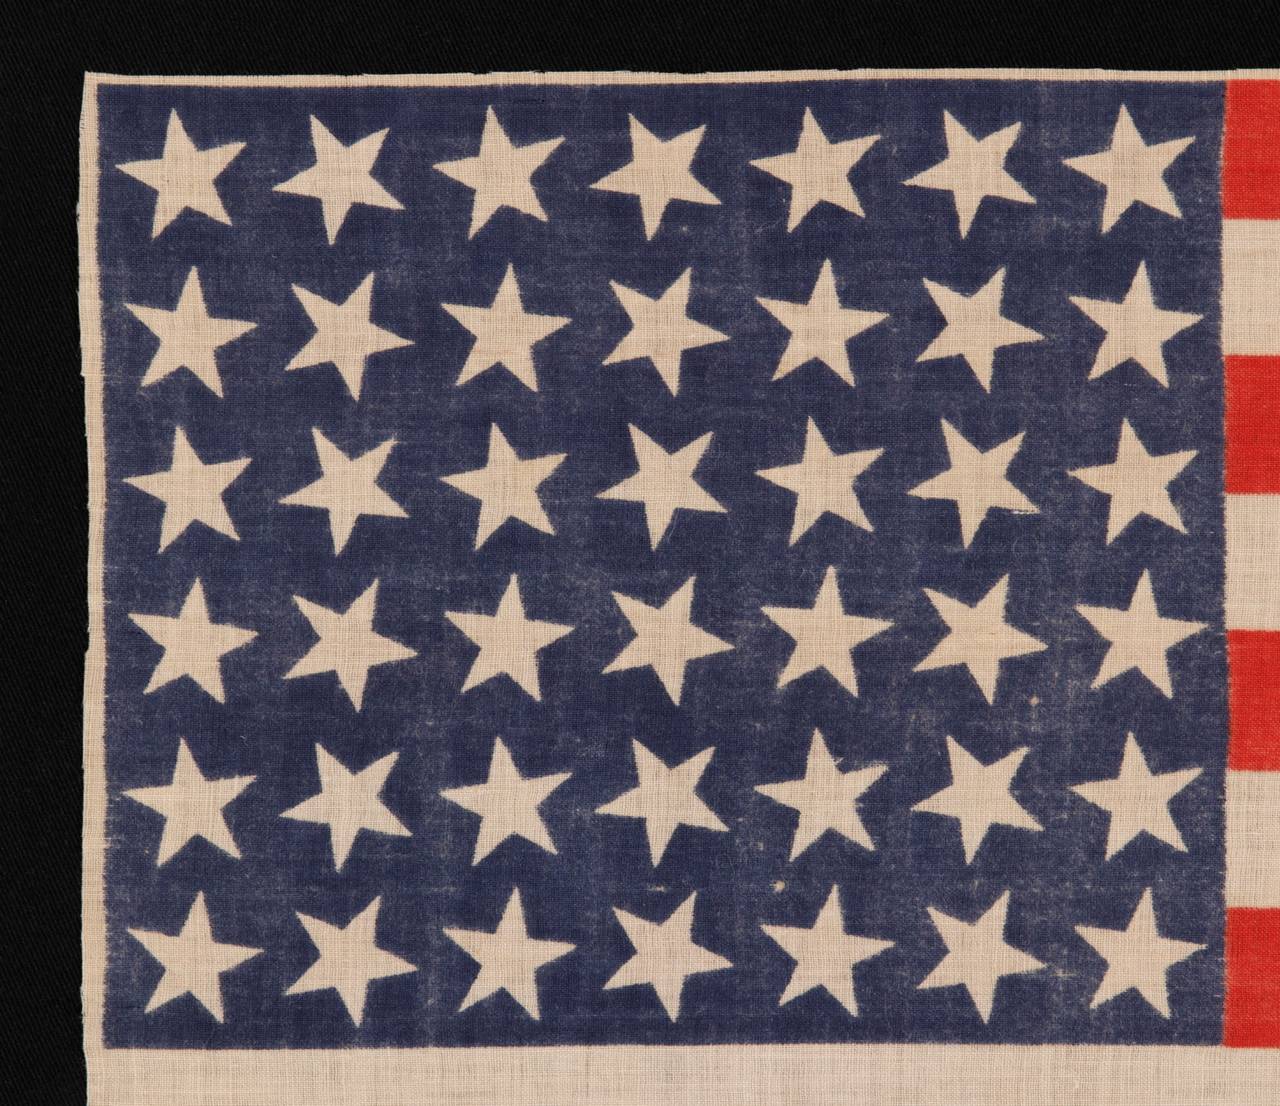 42 star american flag